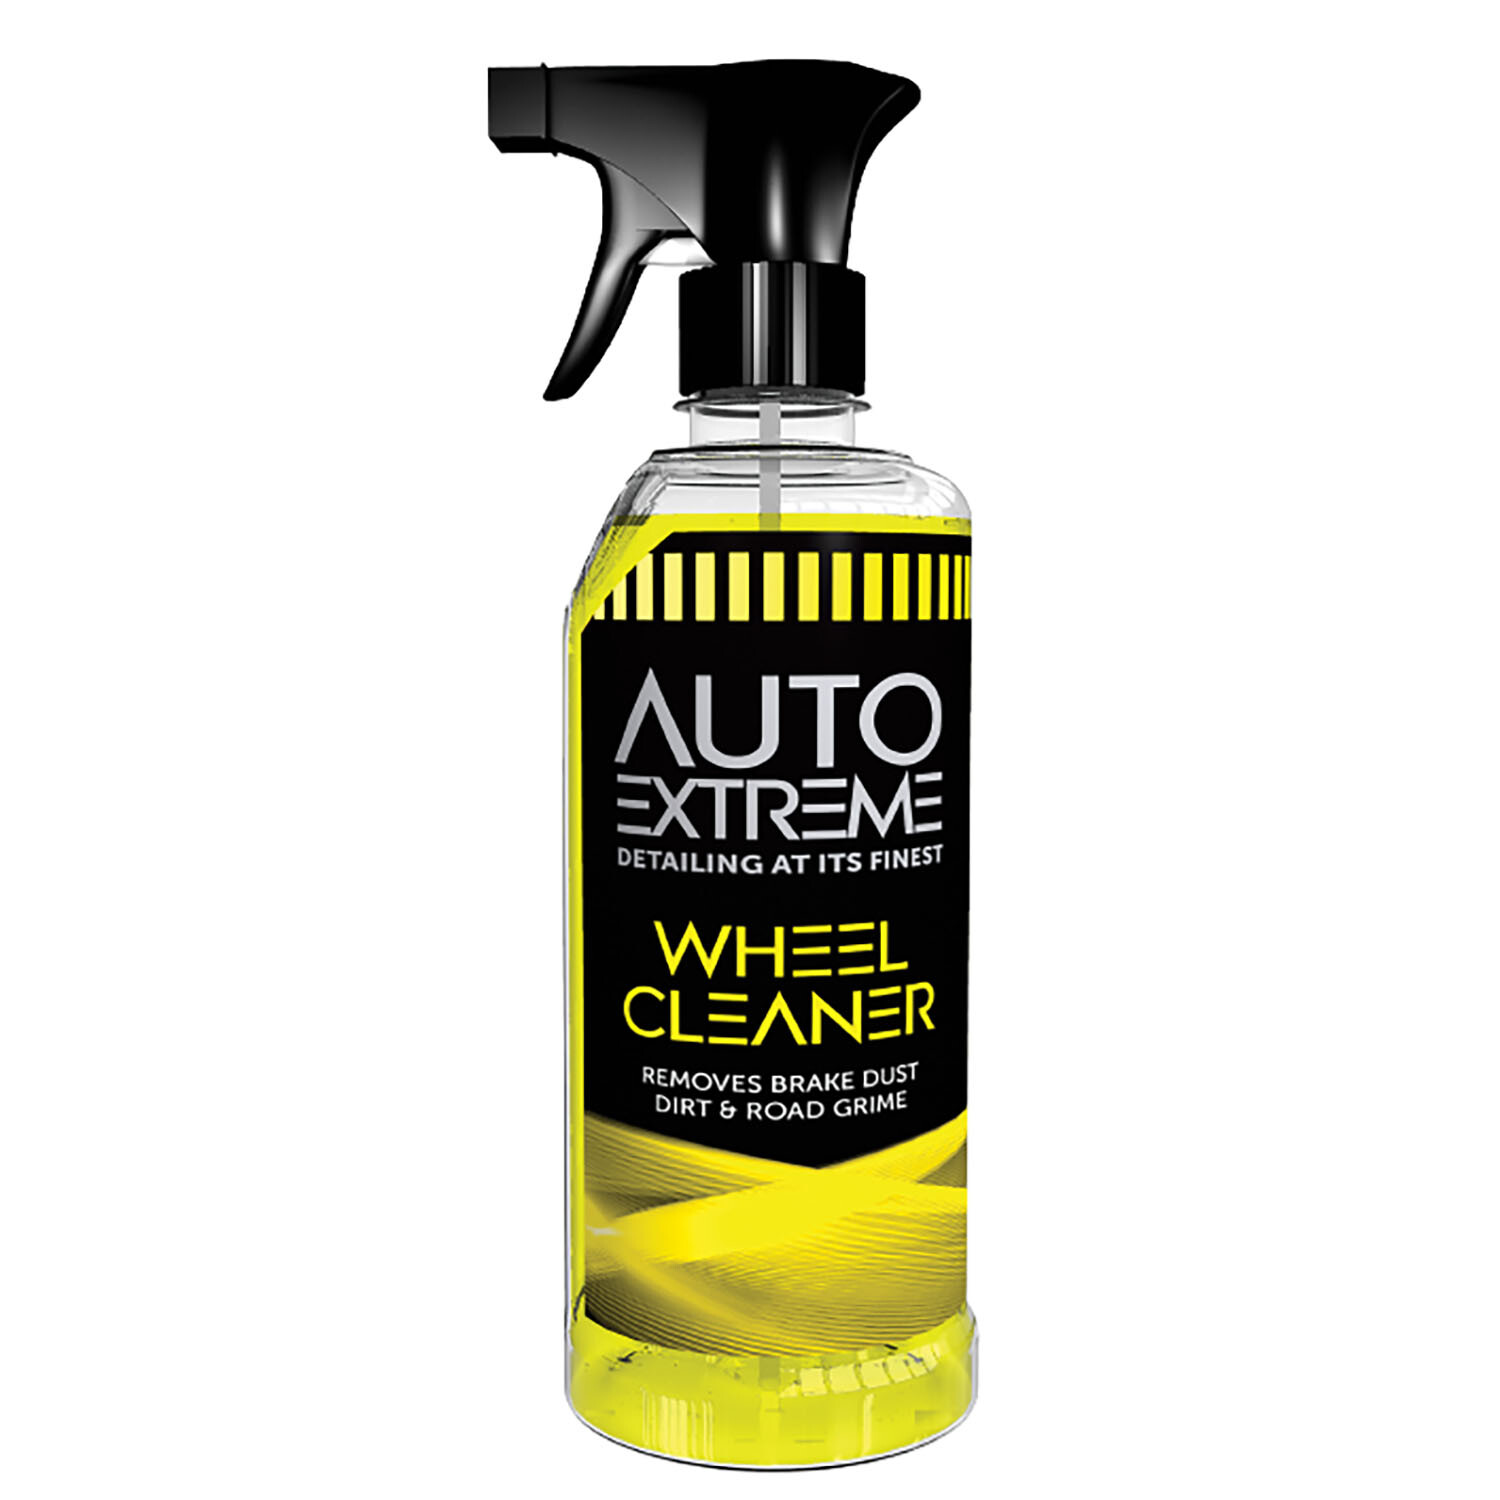 Auto Extreme Wheel Cleaner Image